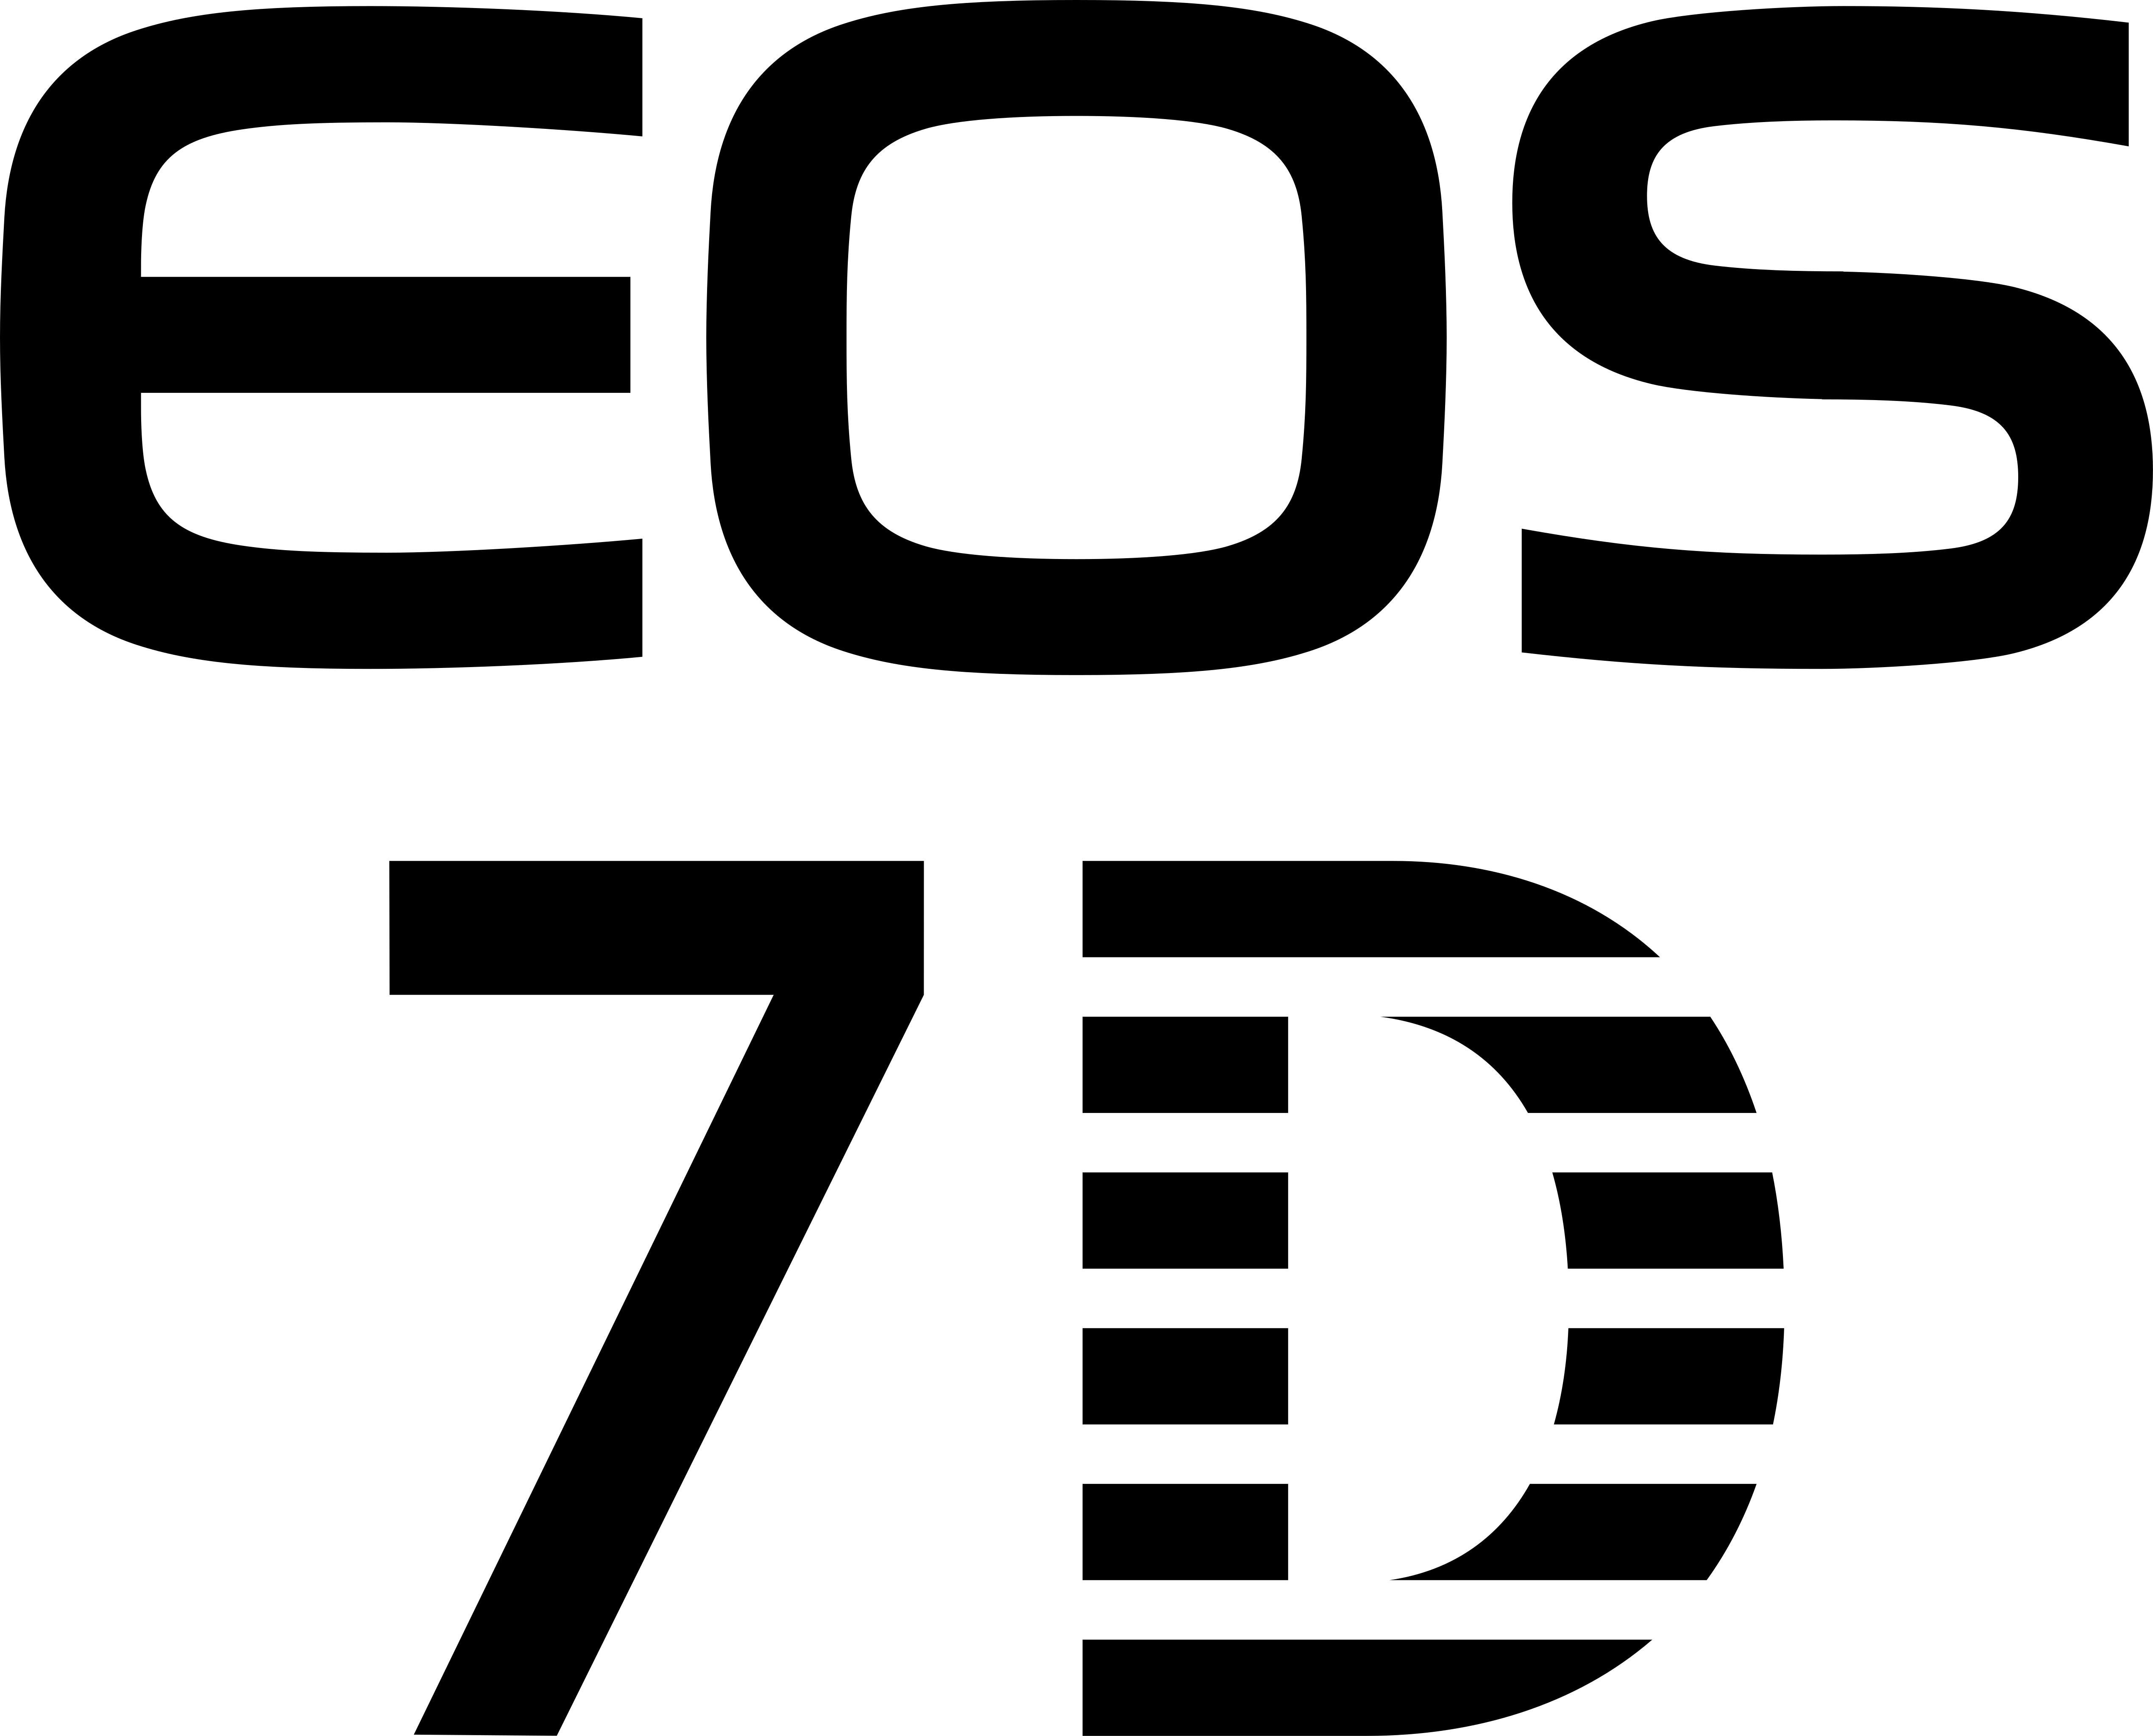 EOS Logo - File:EOS 7D logo.svg - Wikimedia Commons